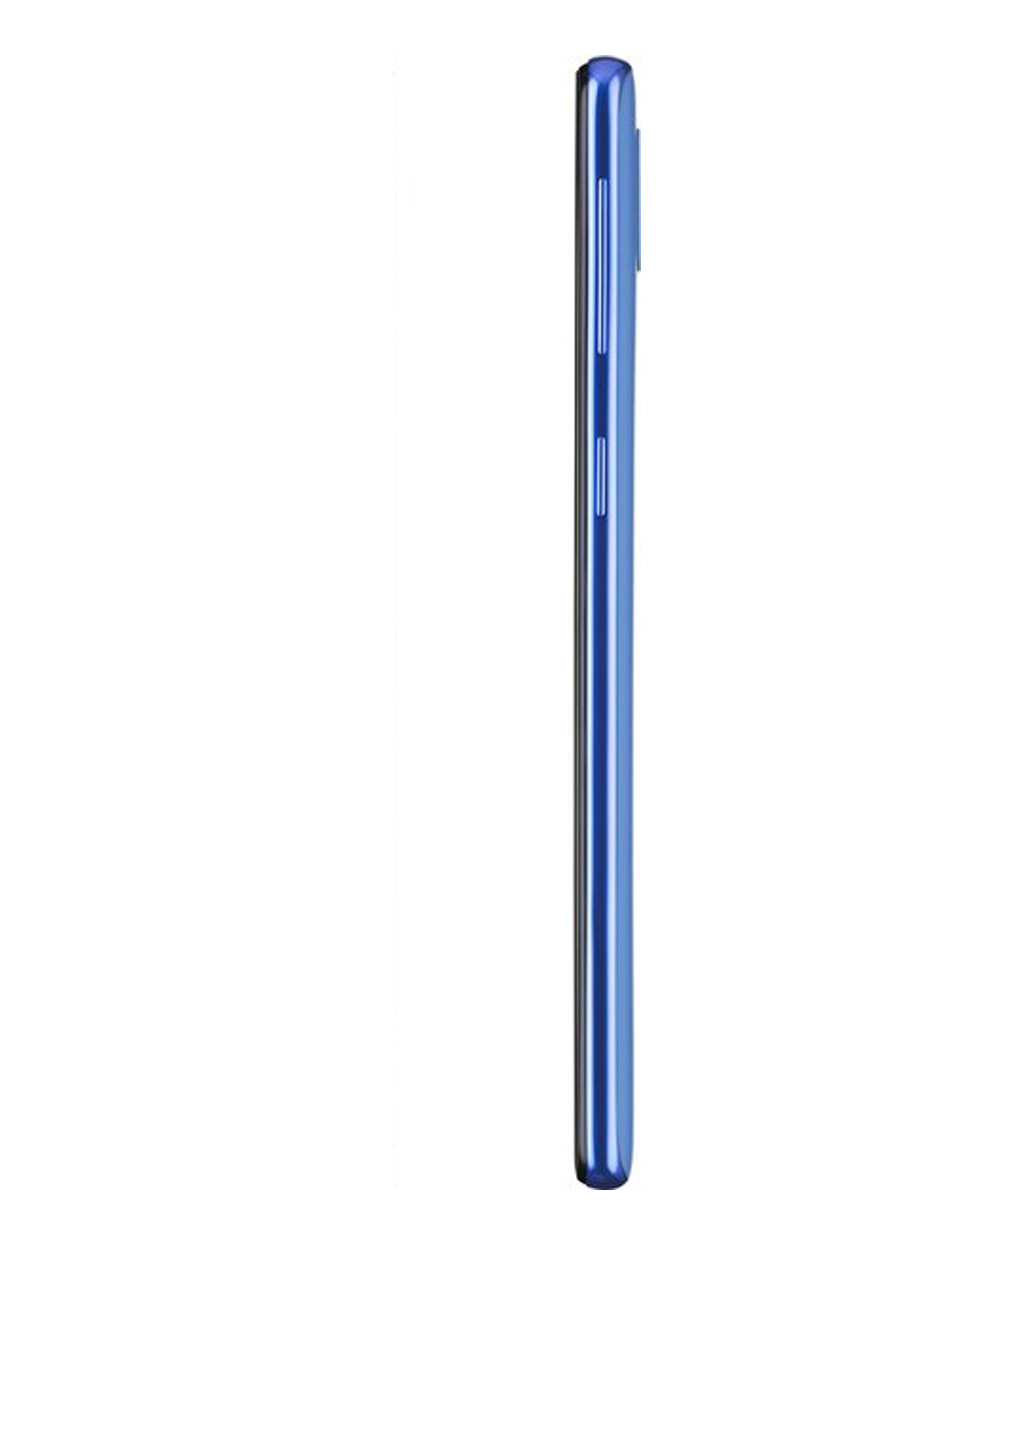 Смартфон Samsung Galaxy A40 4/64GB Blue (SM-A405FZBDSEK) синий